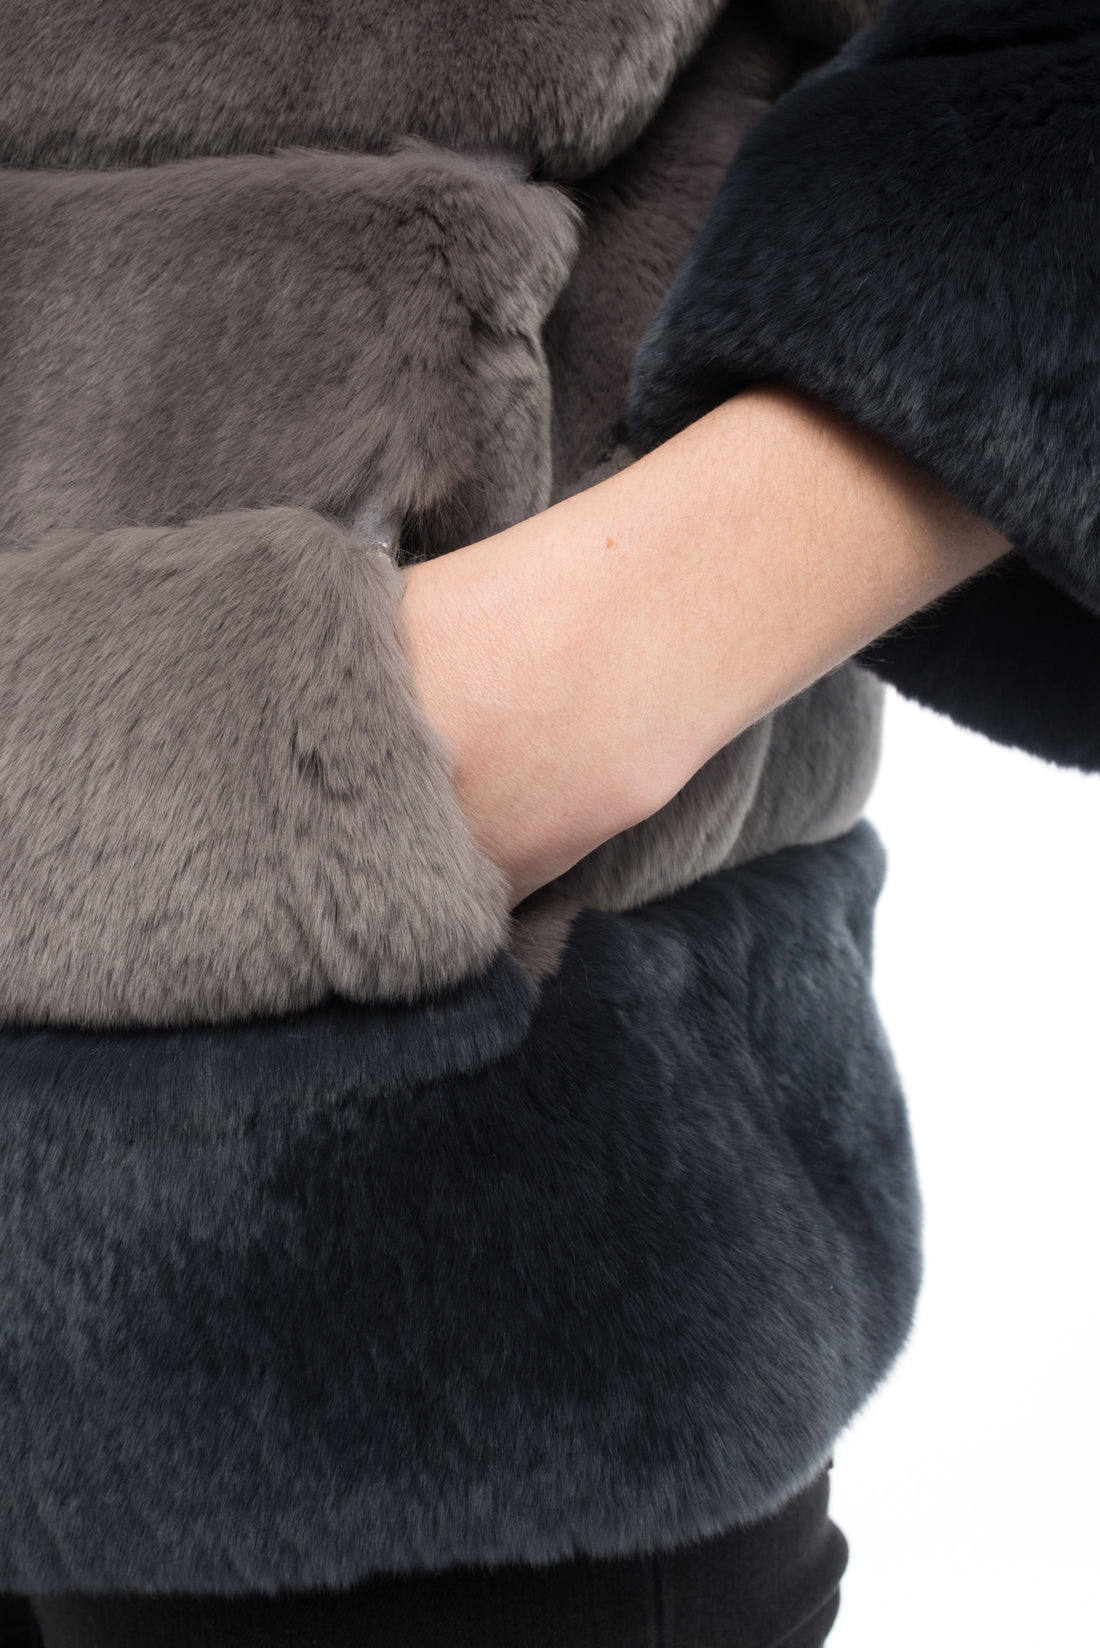 Lysa Lash Grey 2-Tone Sheared Rex Rabbit Fur Jacket - 6